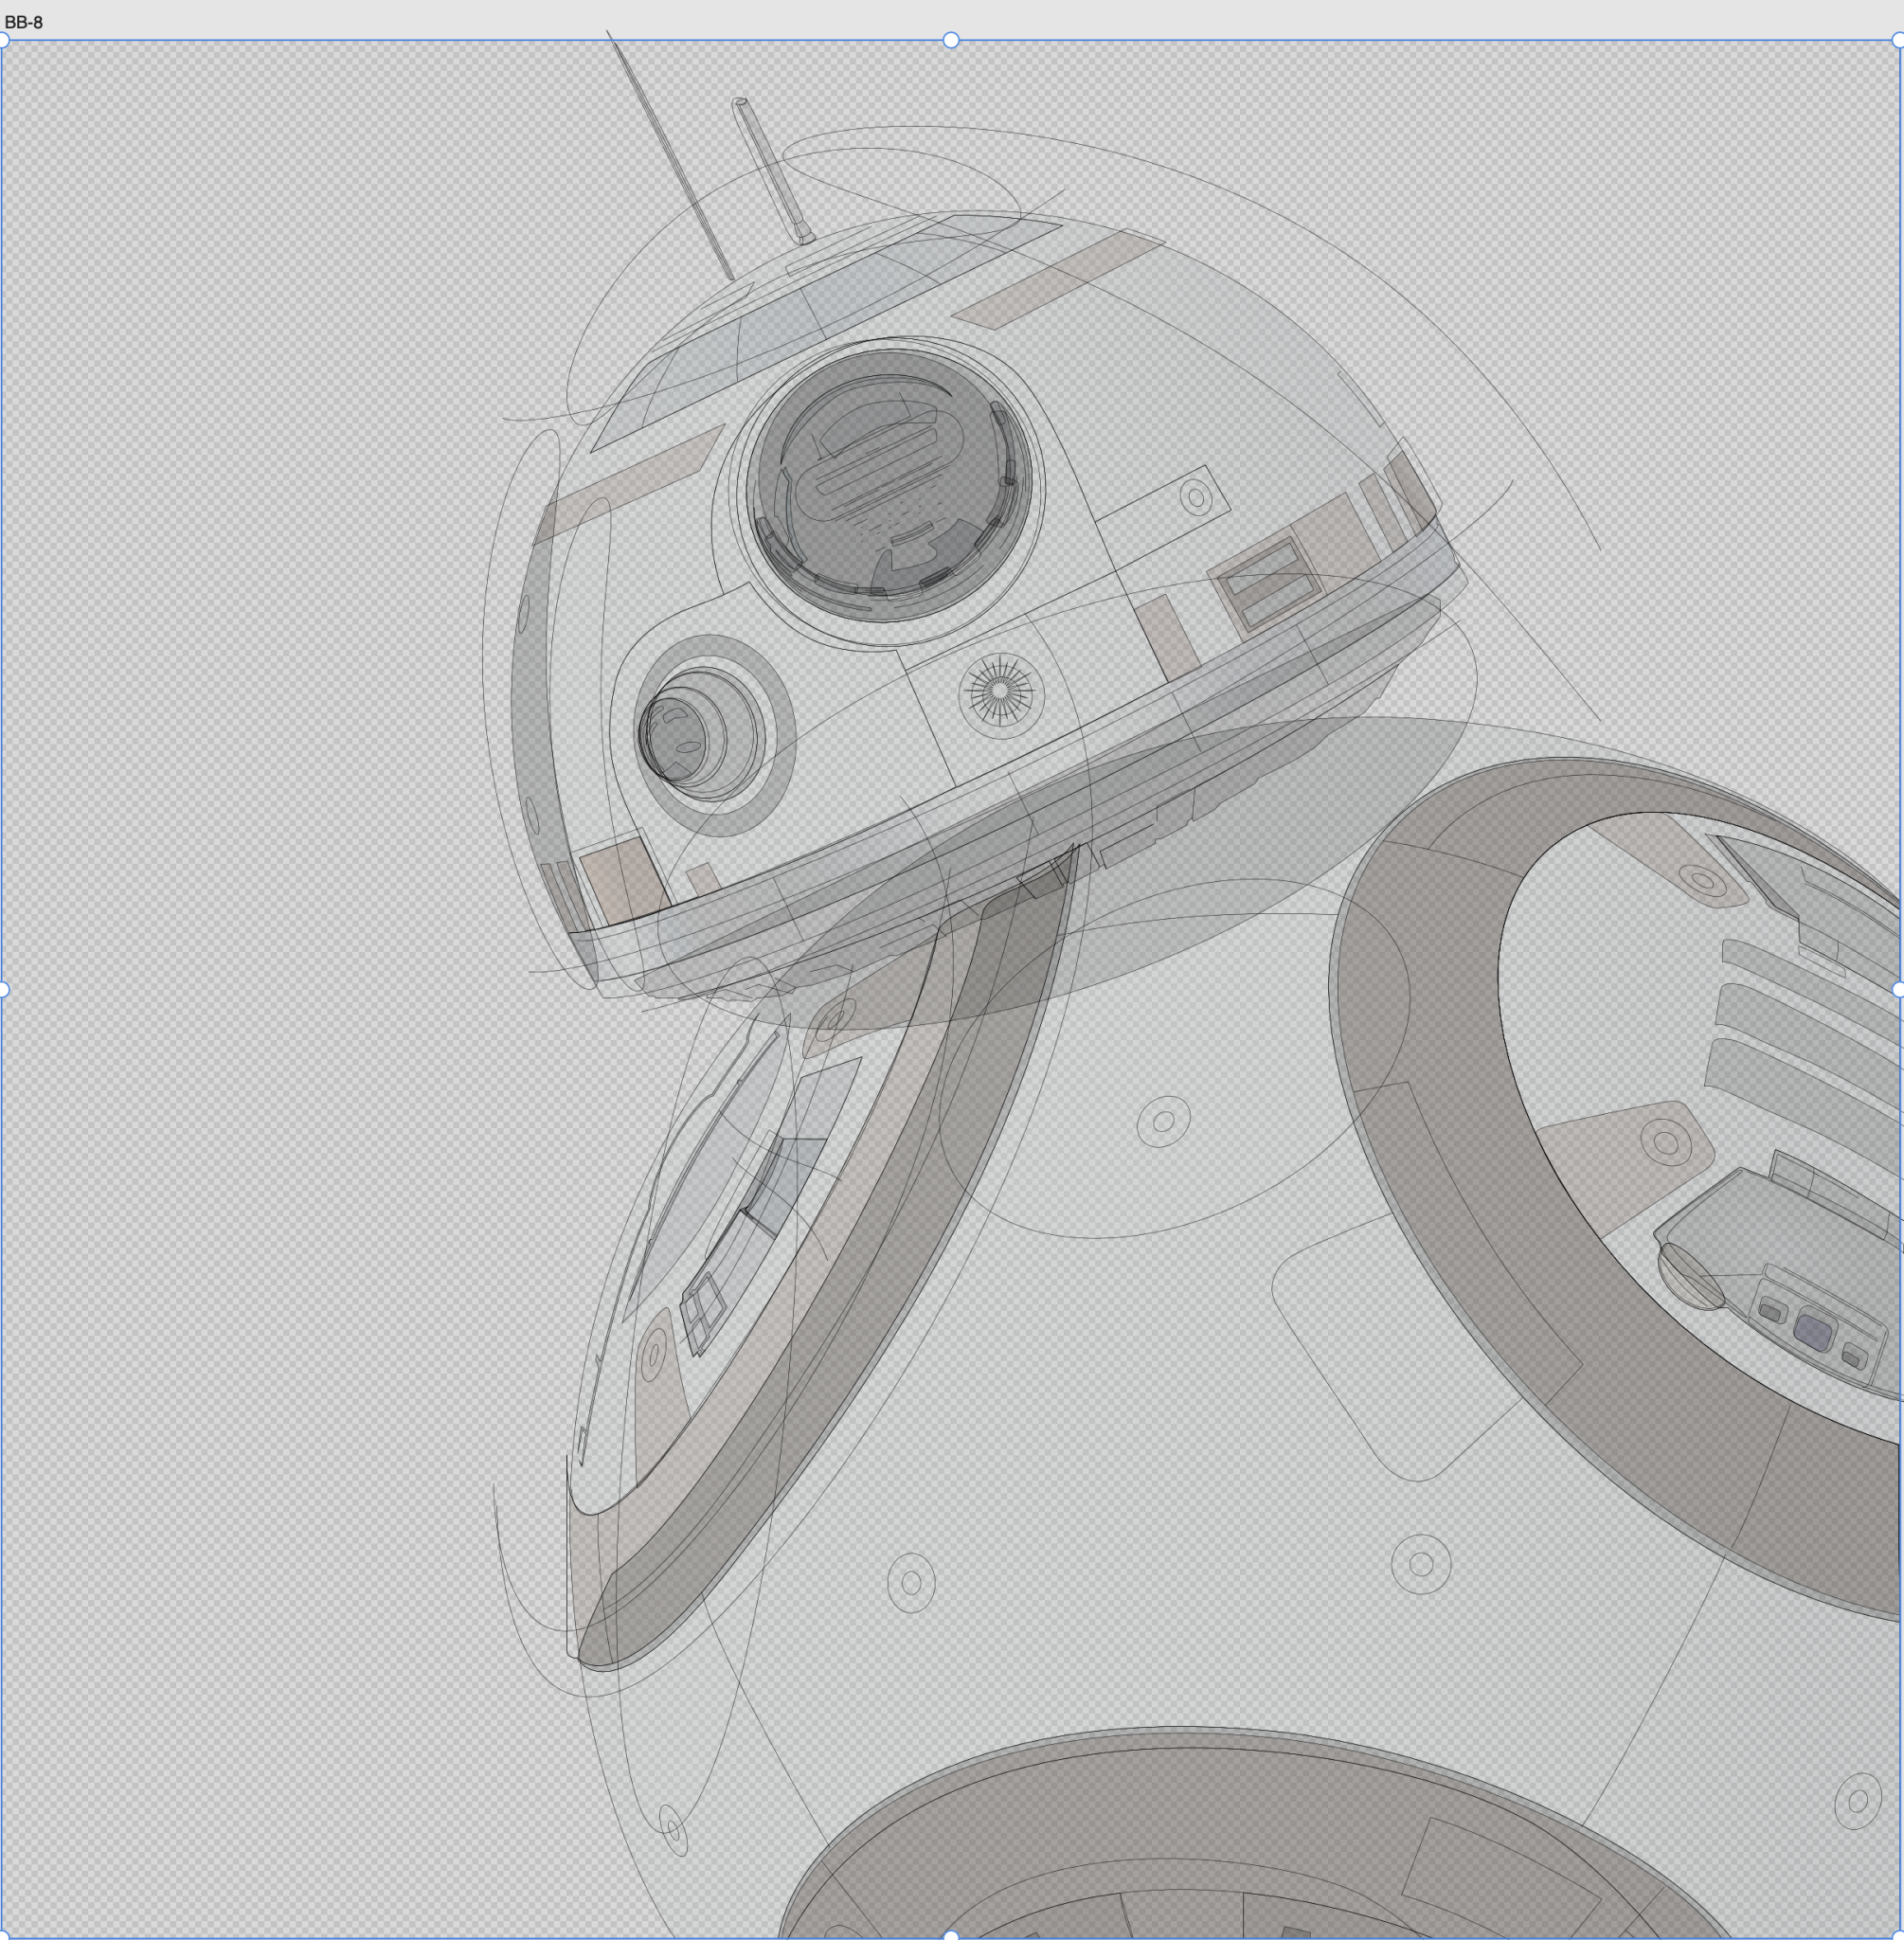 Wireframe representation of BB-8 from Affinity Designer